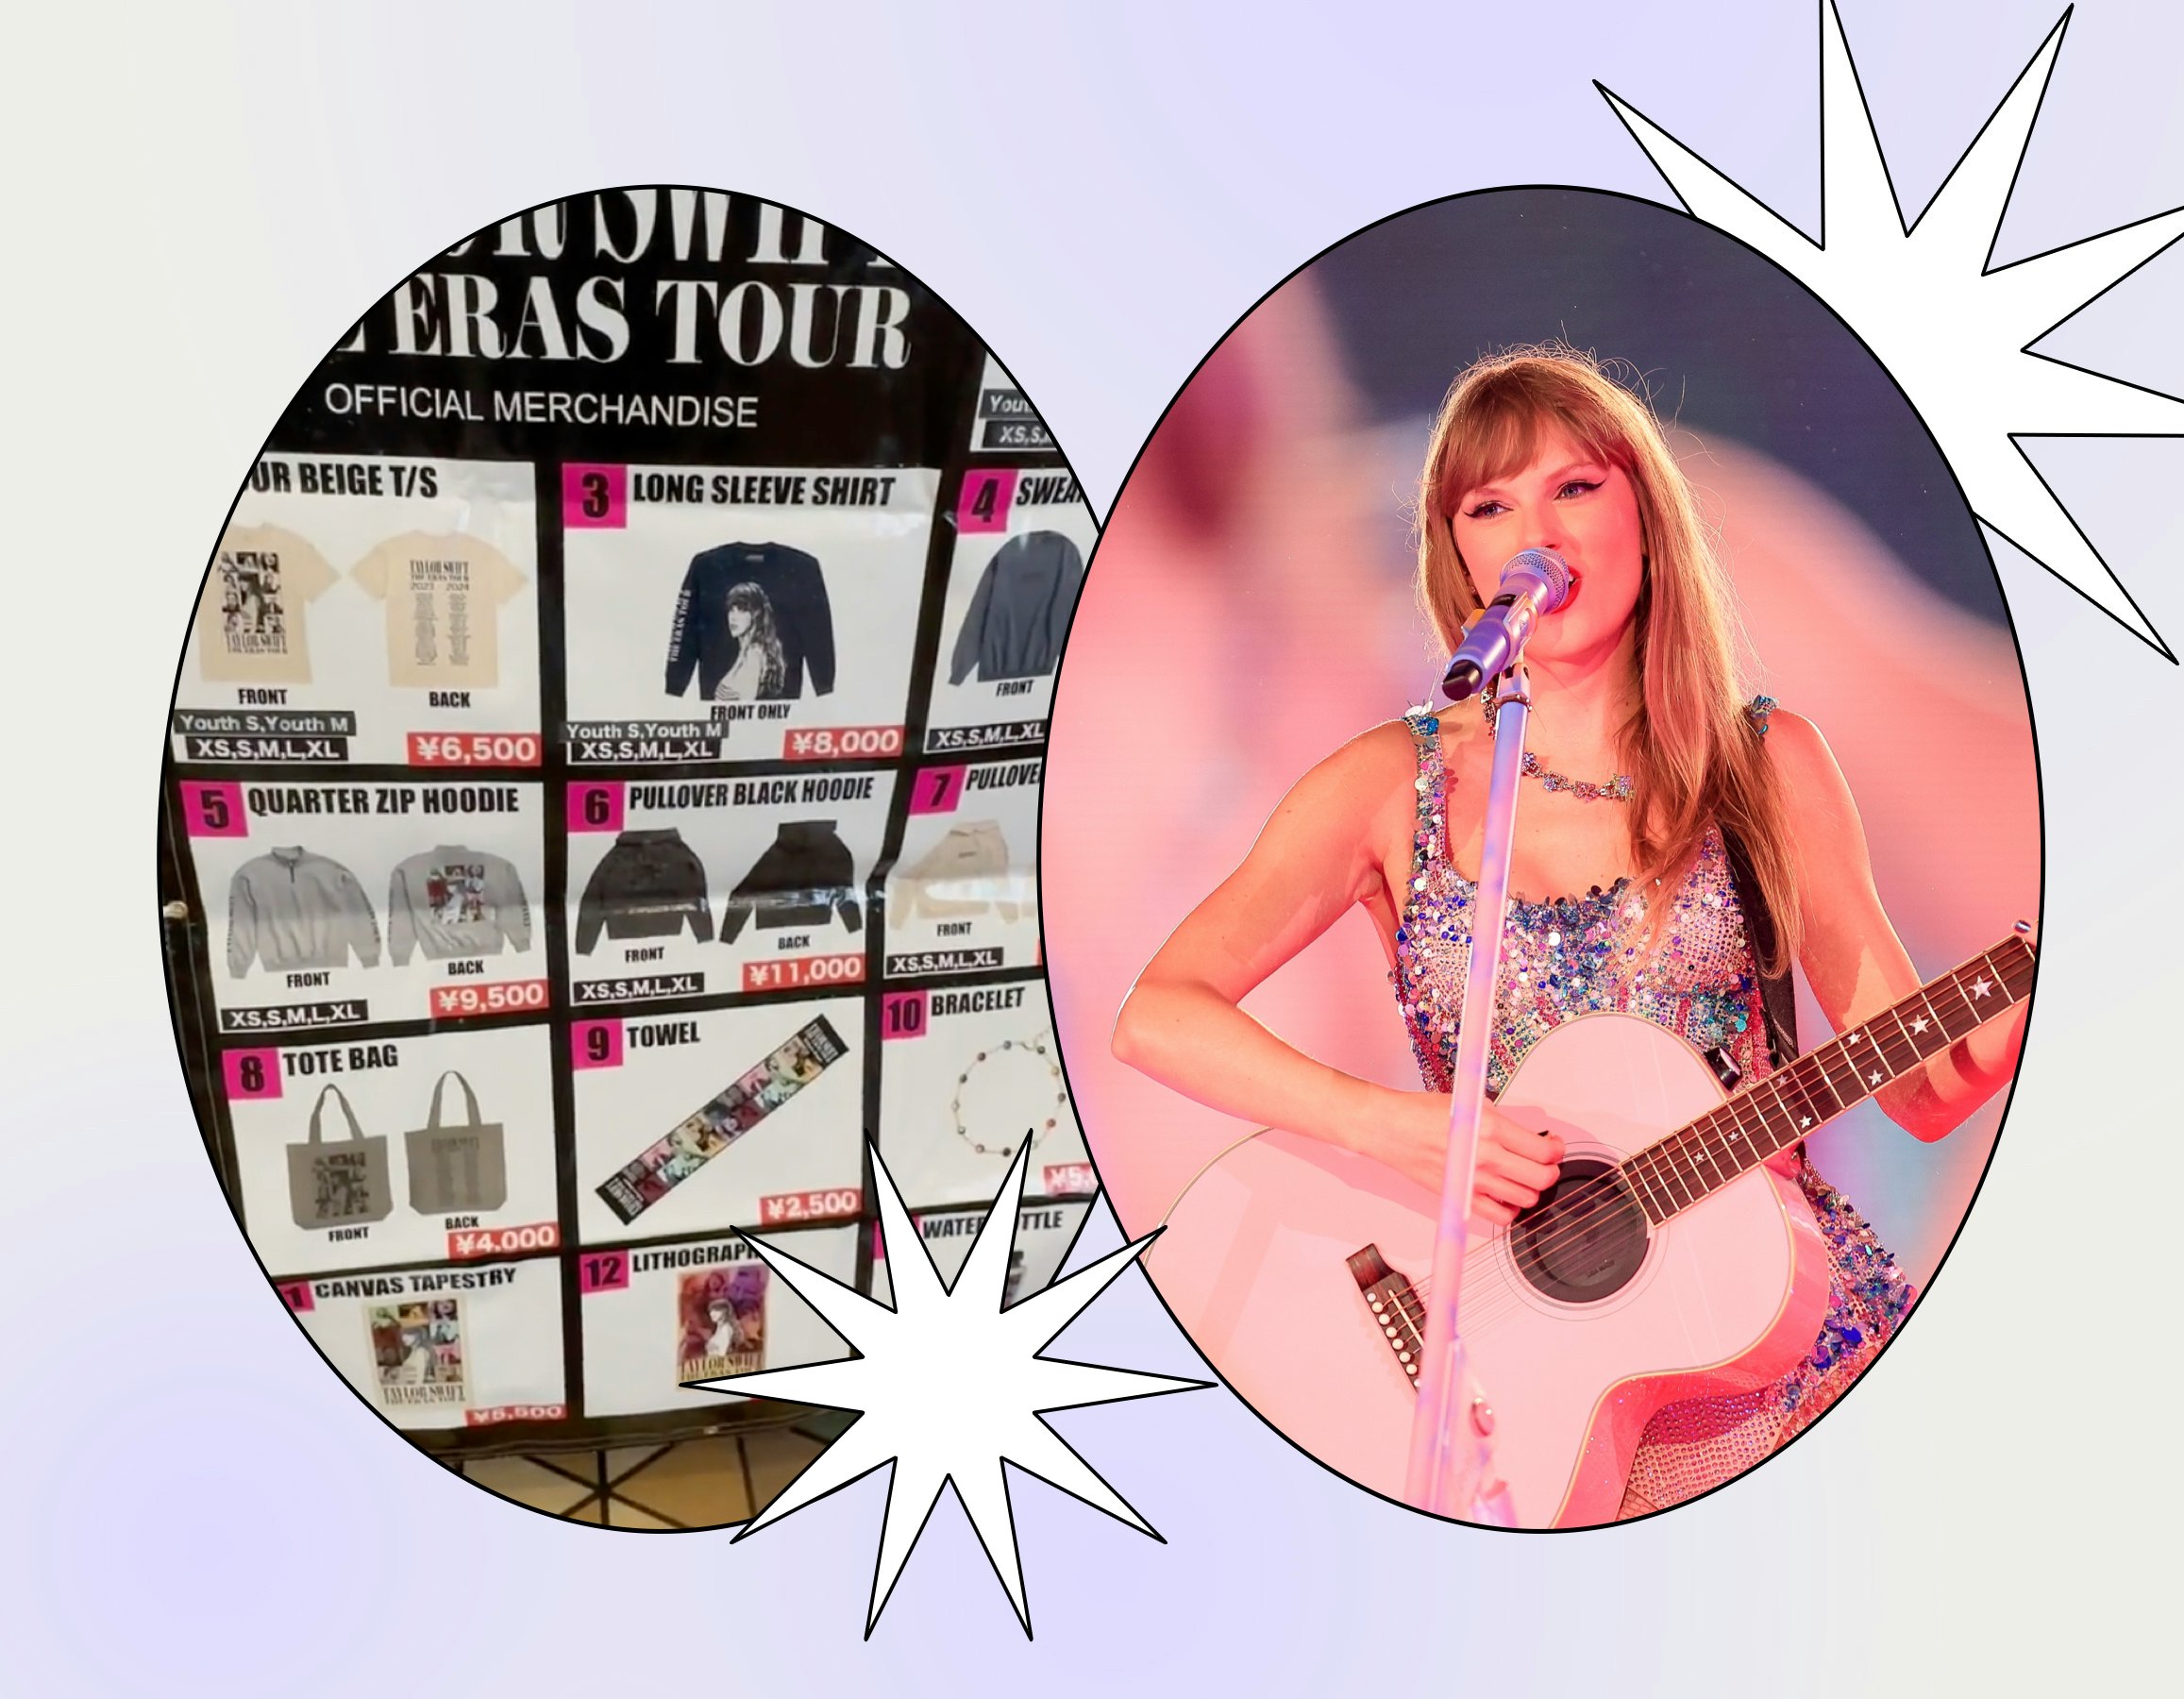 The Eras Tour shop, Taylor Swift Wiki